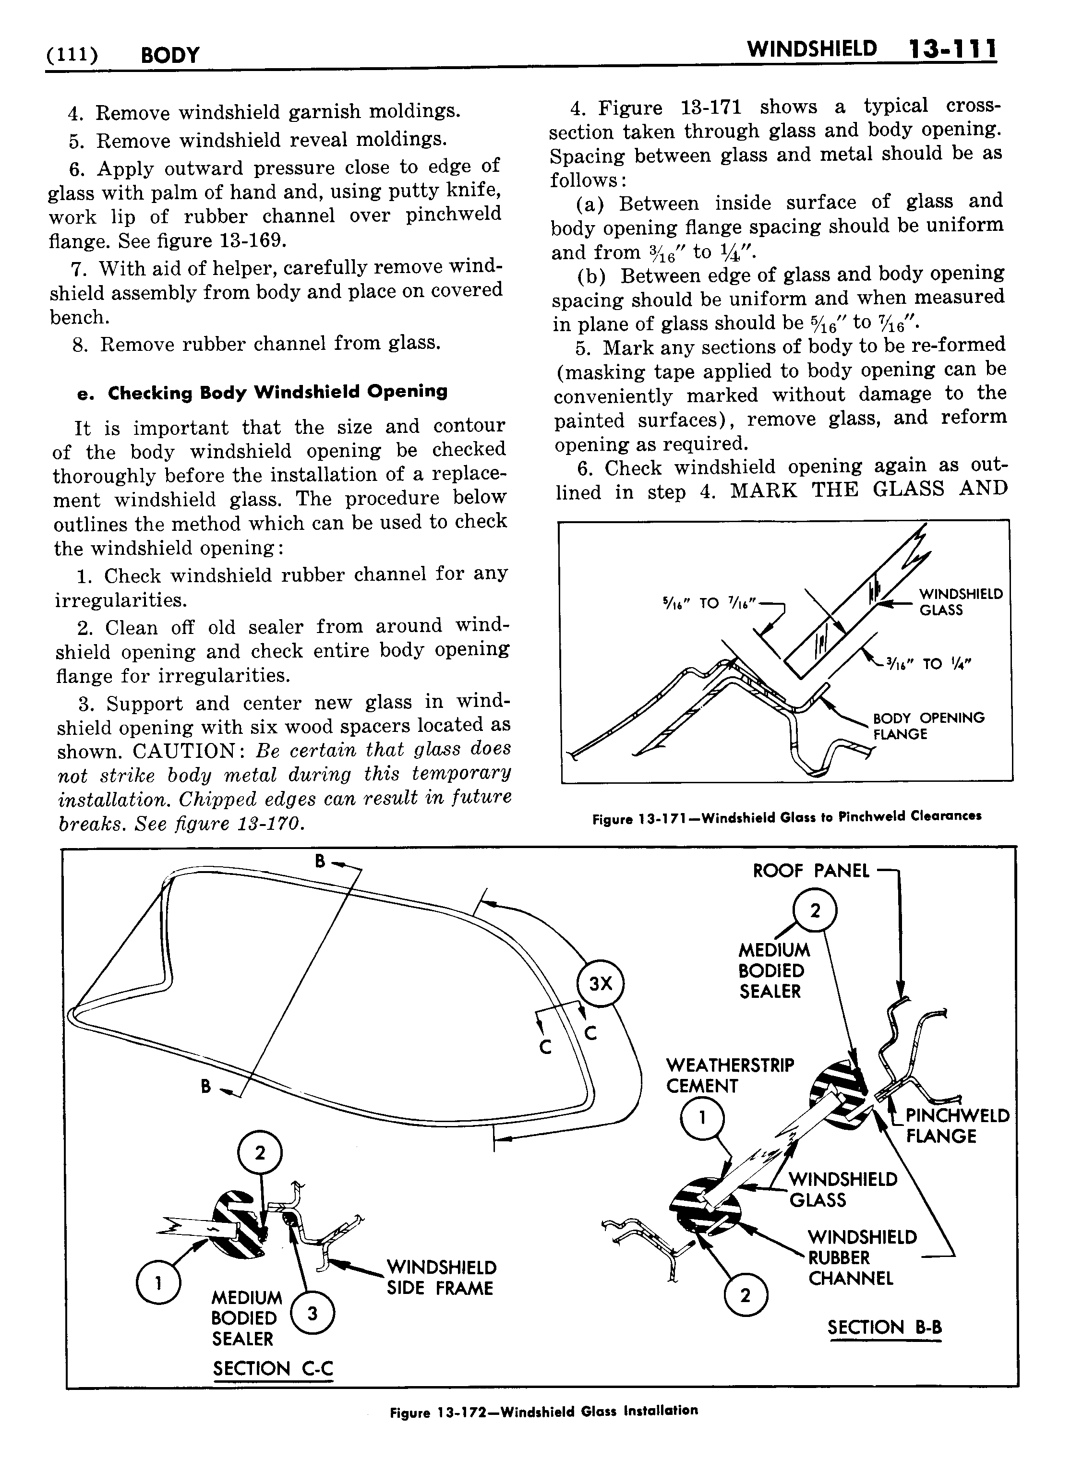 n_1957 Buick Body Service Manual-113-113.jpg